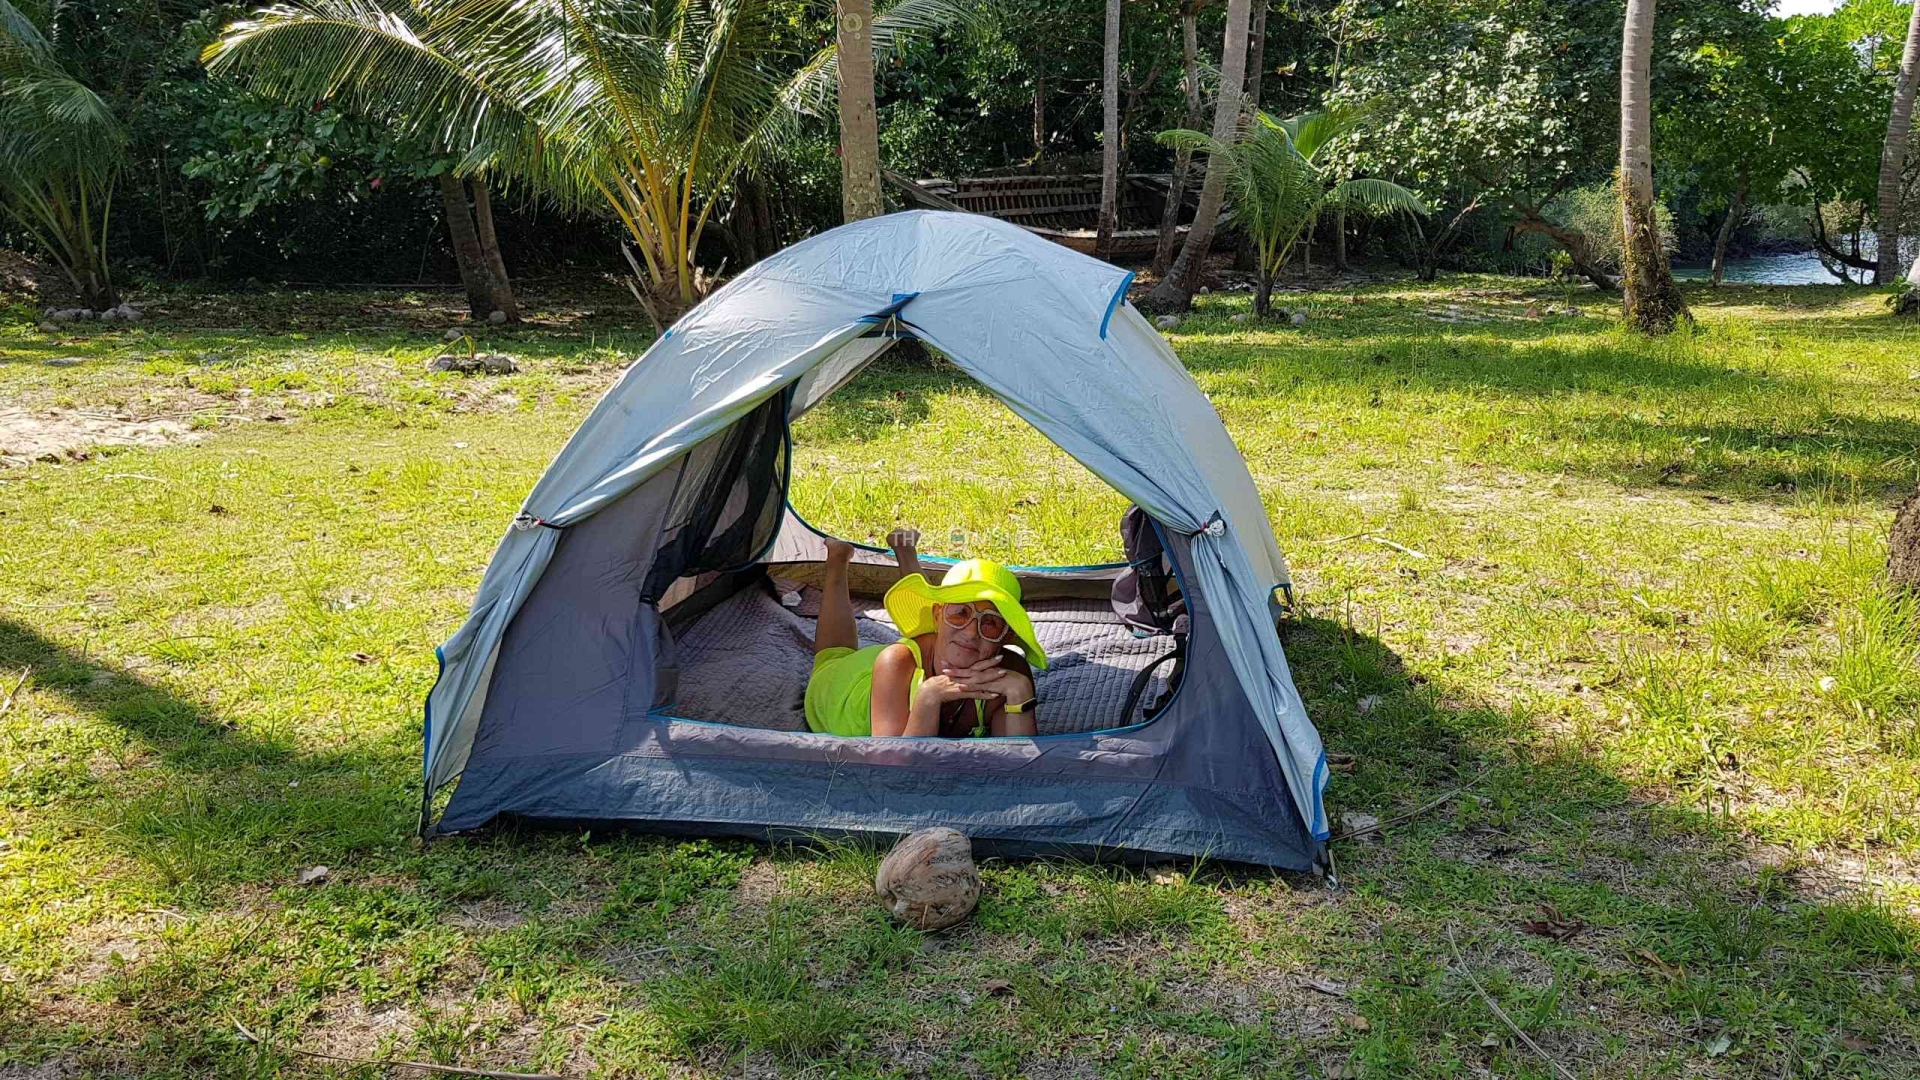 Цена экскурсии на необитаемый остров Ко Нгам в Тайланде с палатками в